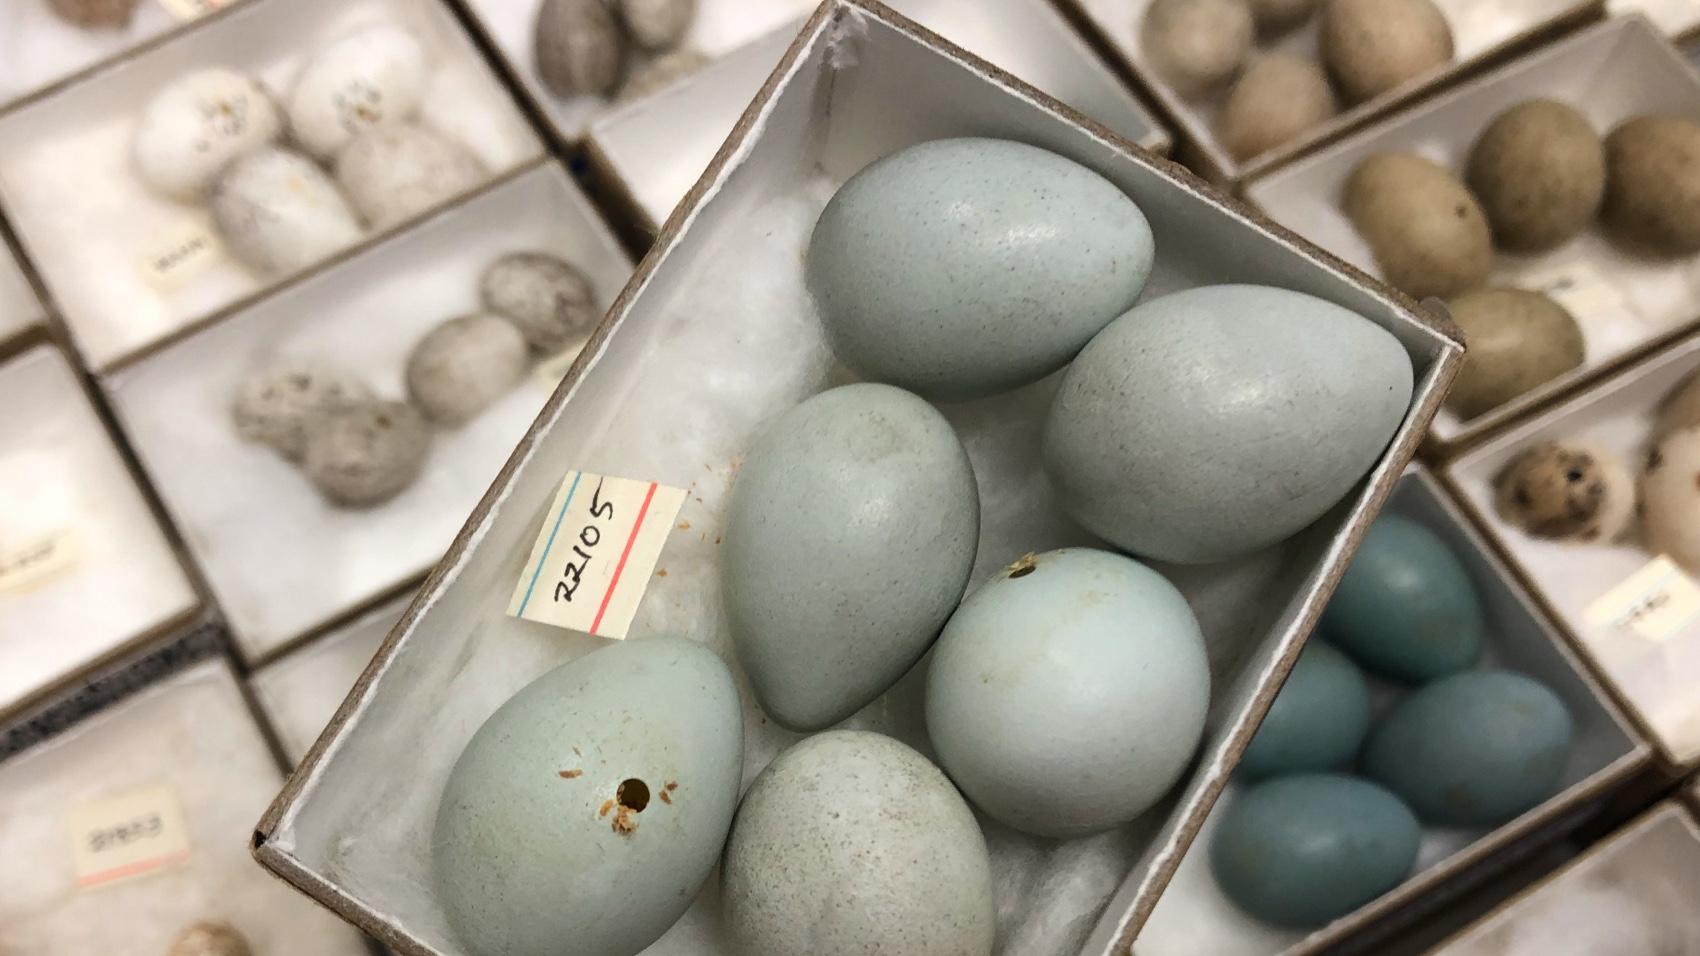 Catbird eggs. (Patty Wetli / WTTW News)